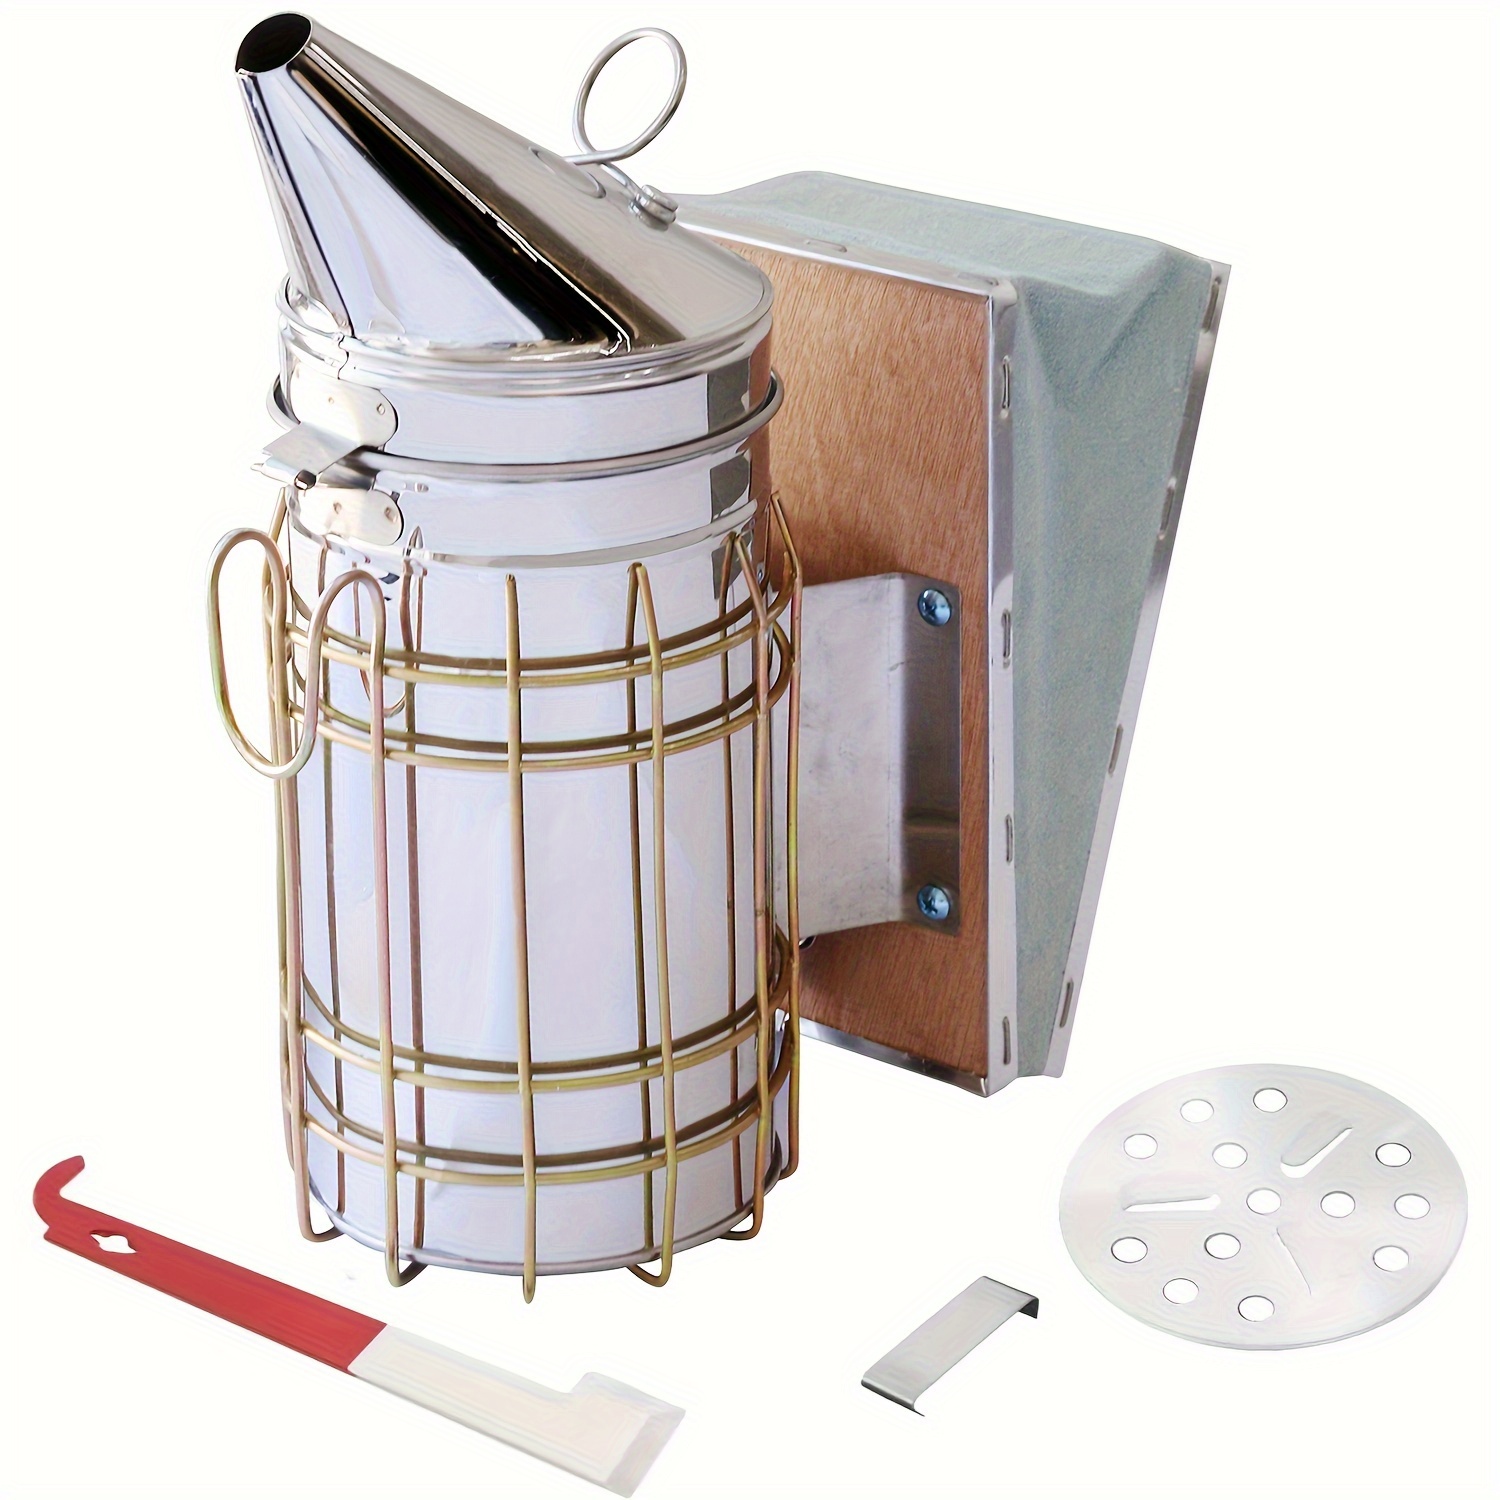 

1 Pack, Bee Hive Smoker Stainless Steel Beekeeper Tool Kit With Heat Shield 2 Type Hive Tools Beekeeping Equipment